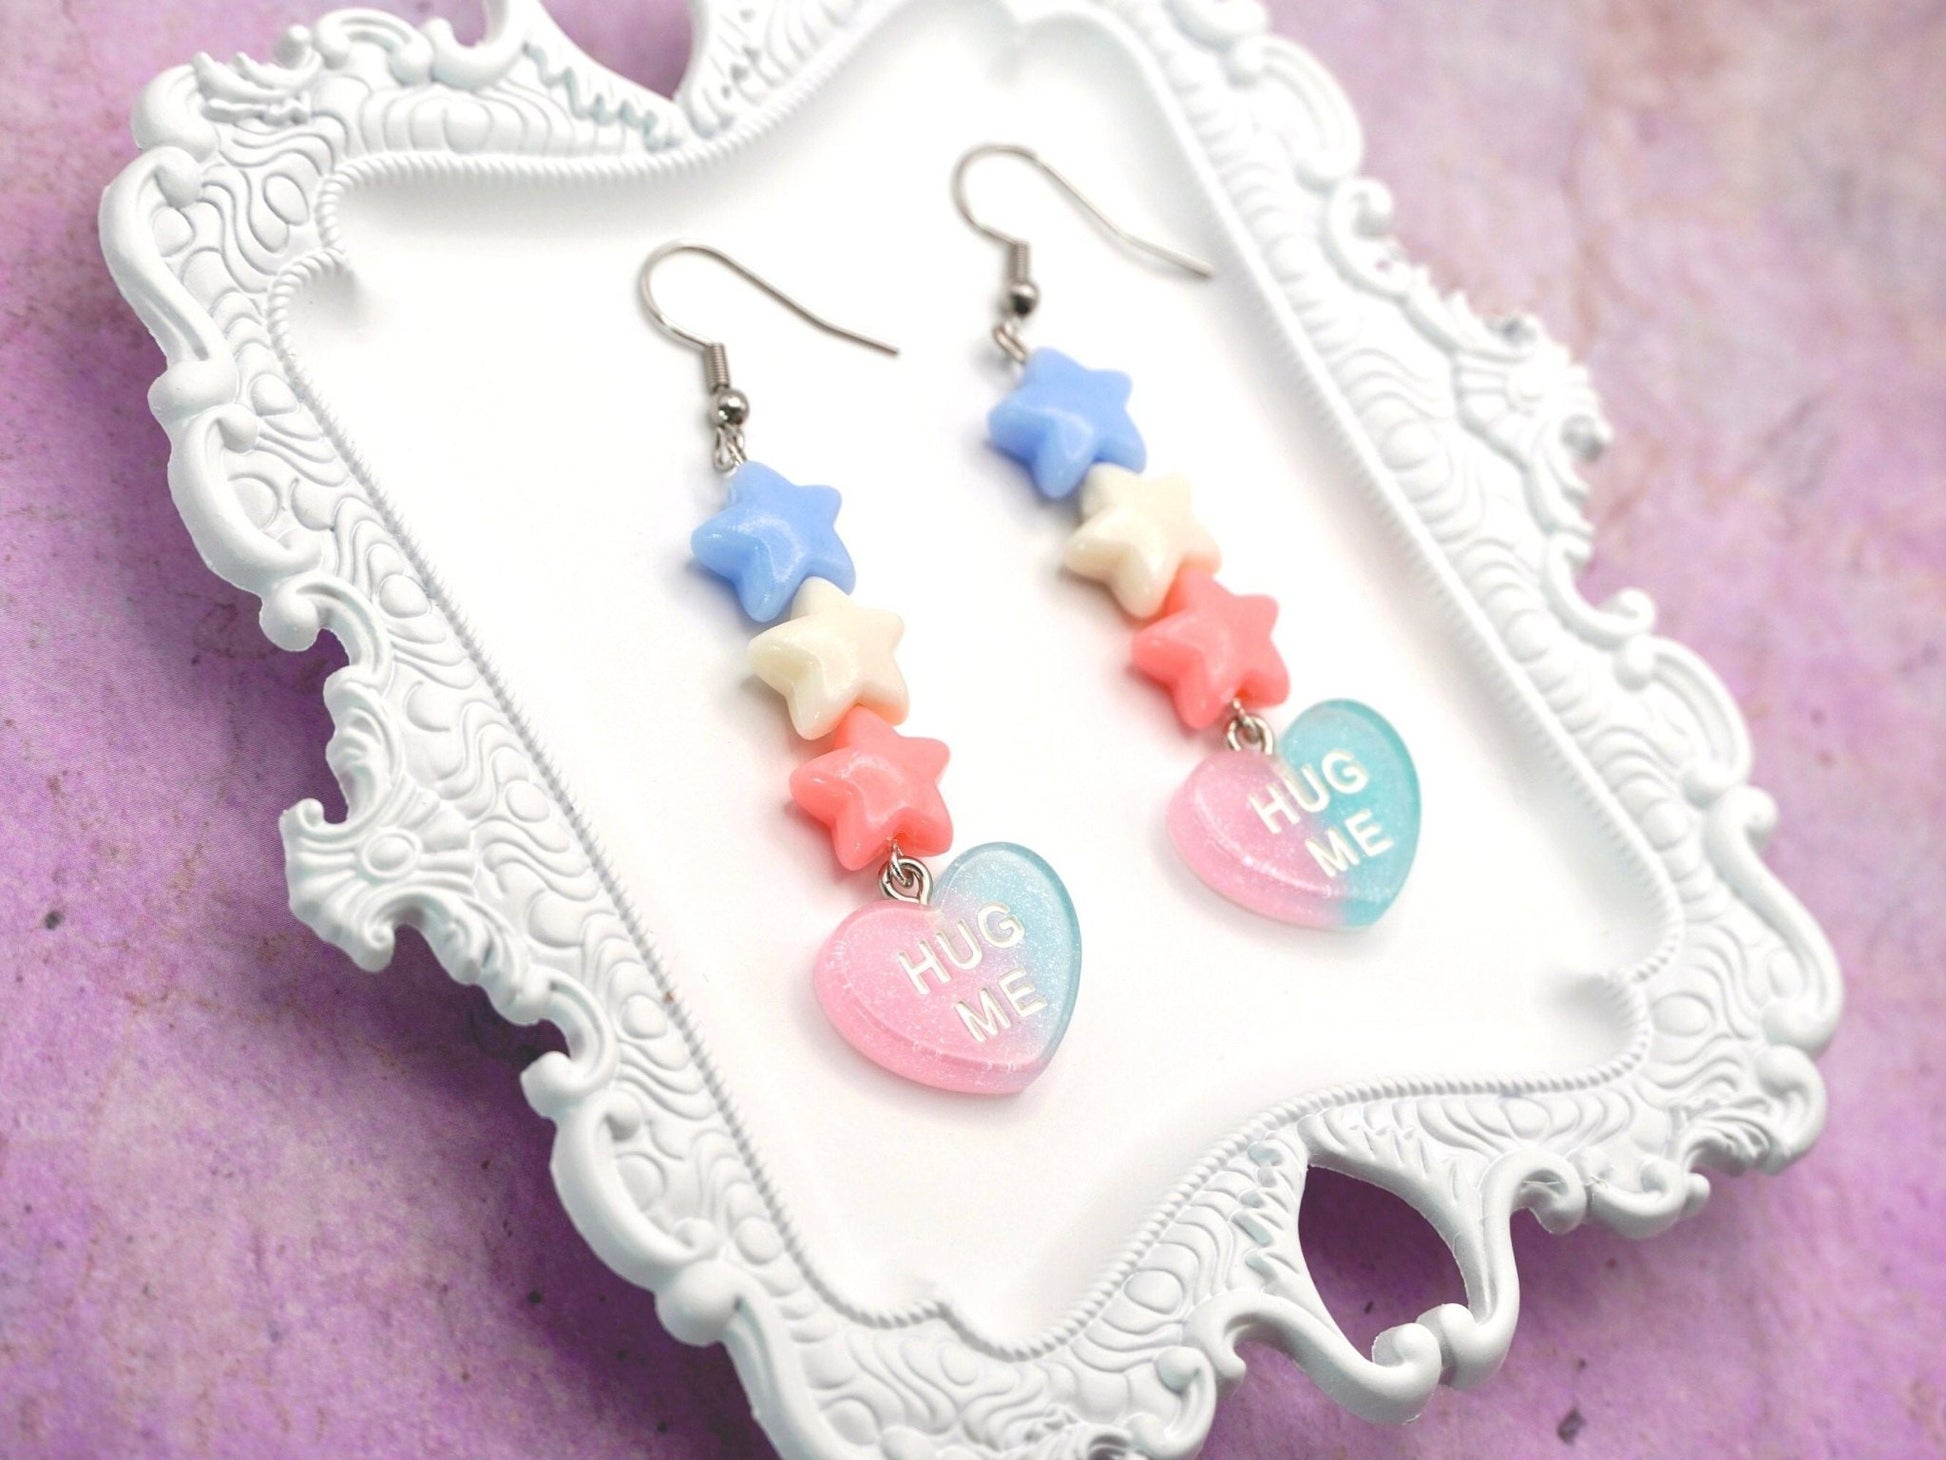 Hug Me Heart Earrings, Trans Pride Earrings, Trans Flag Colored Earrings with Star Beads - Dekowaii Jewelry Company